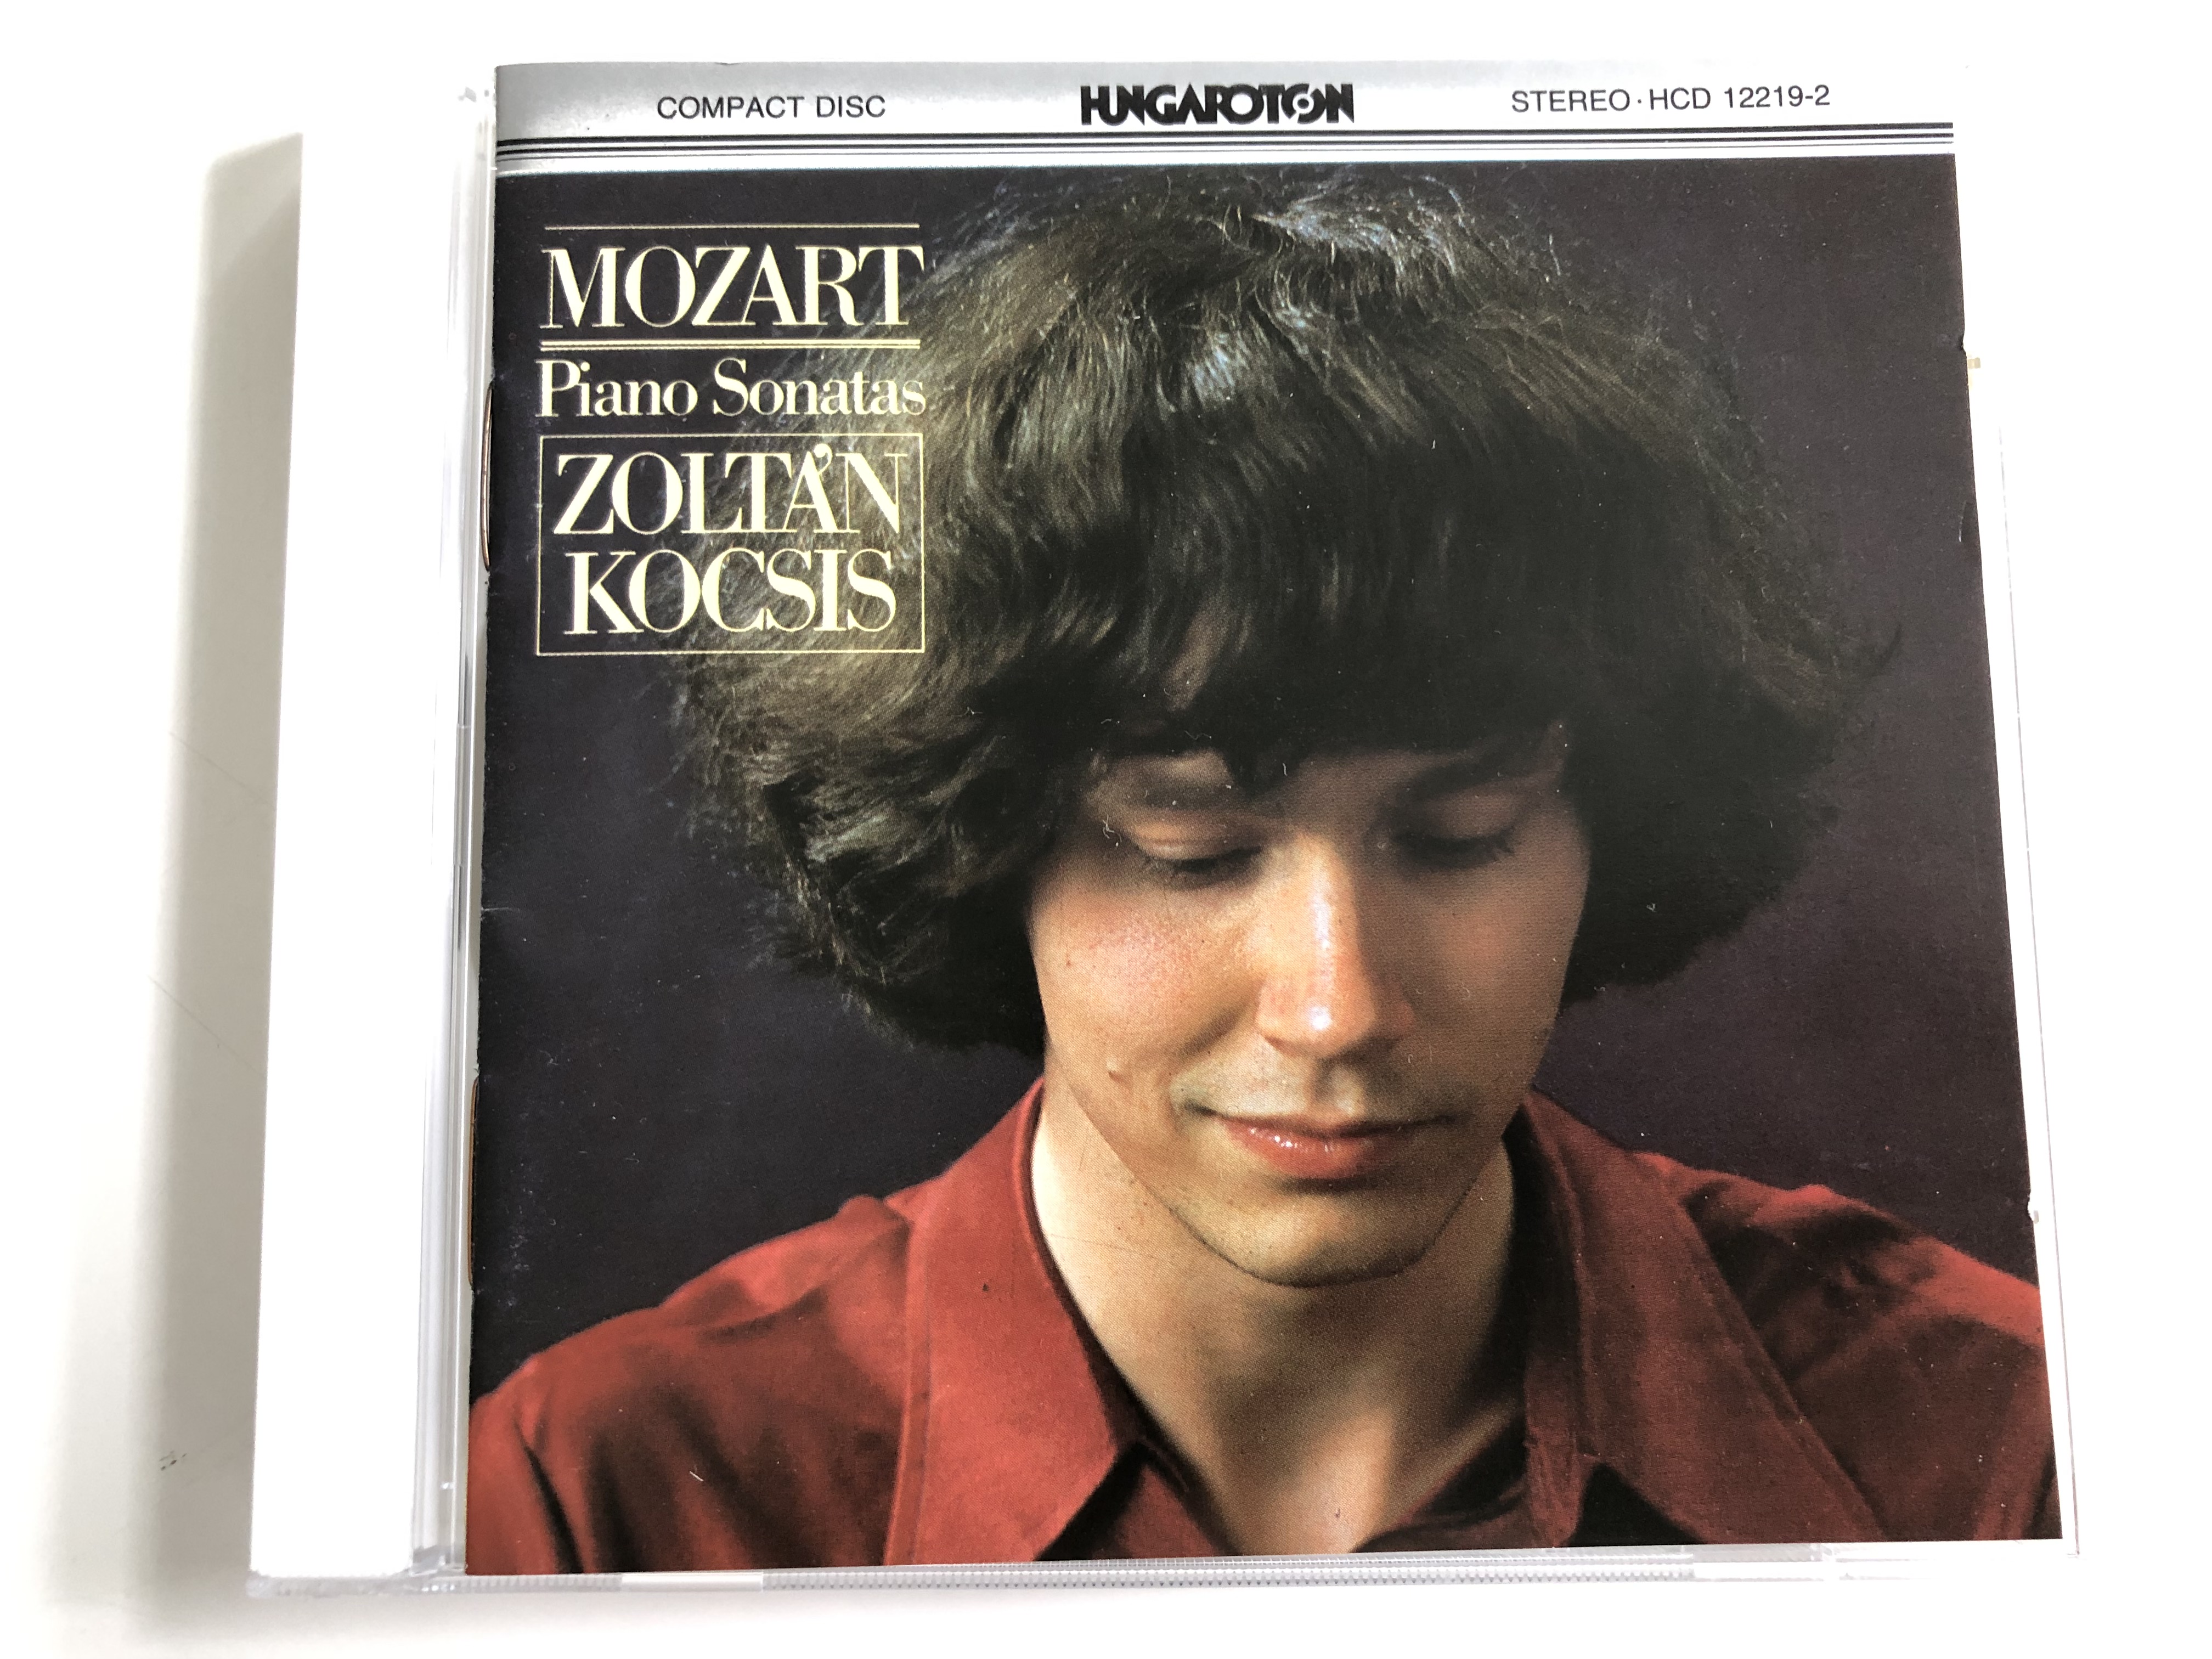 mozart-piano-sonatas-zolt-n-kocsis-hungaroton-audio-cd-stereo-1980-hcd-12219-2-1-.jpg